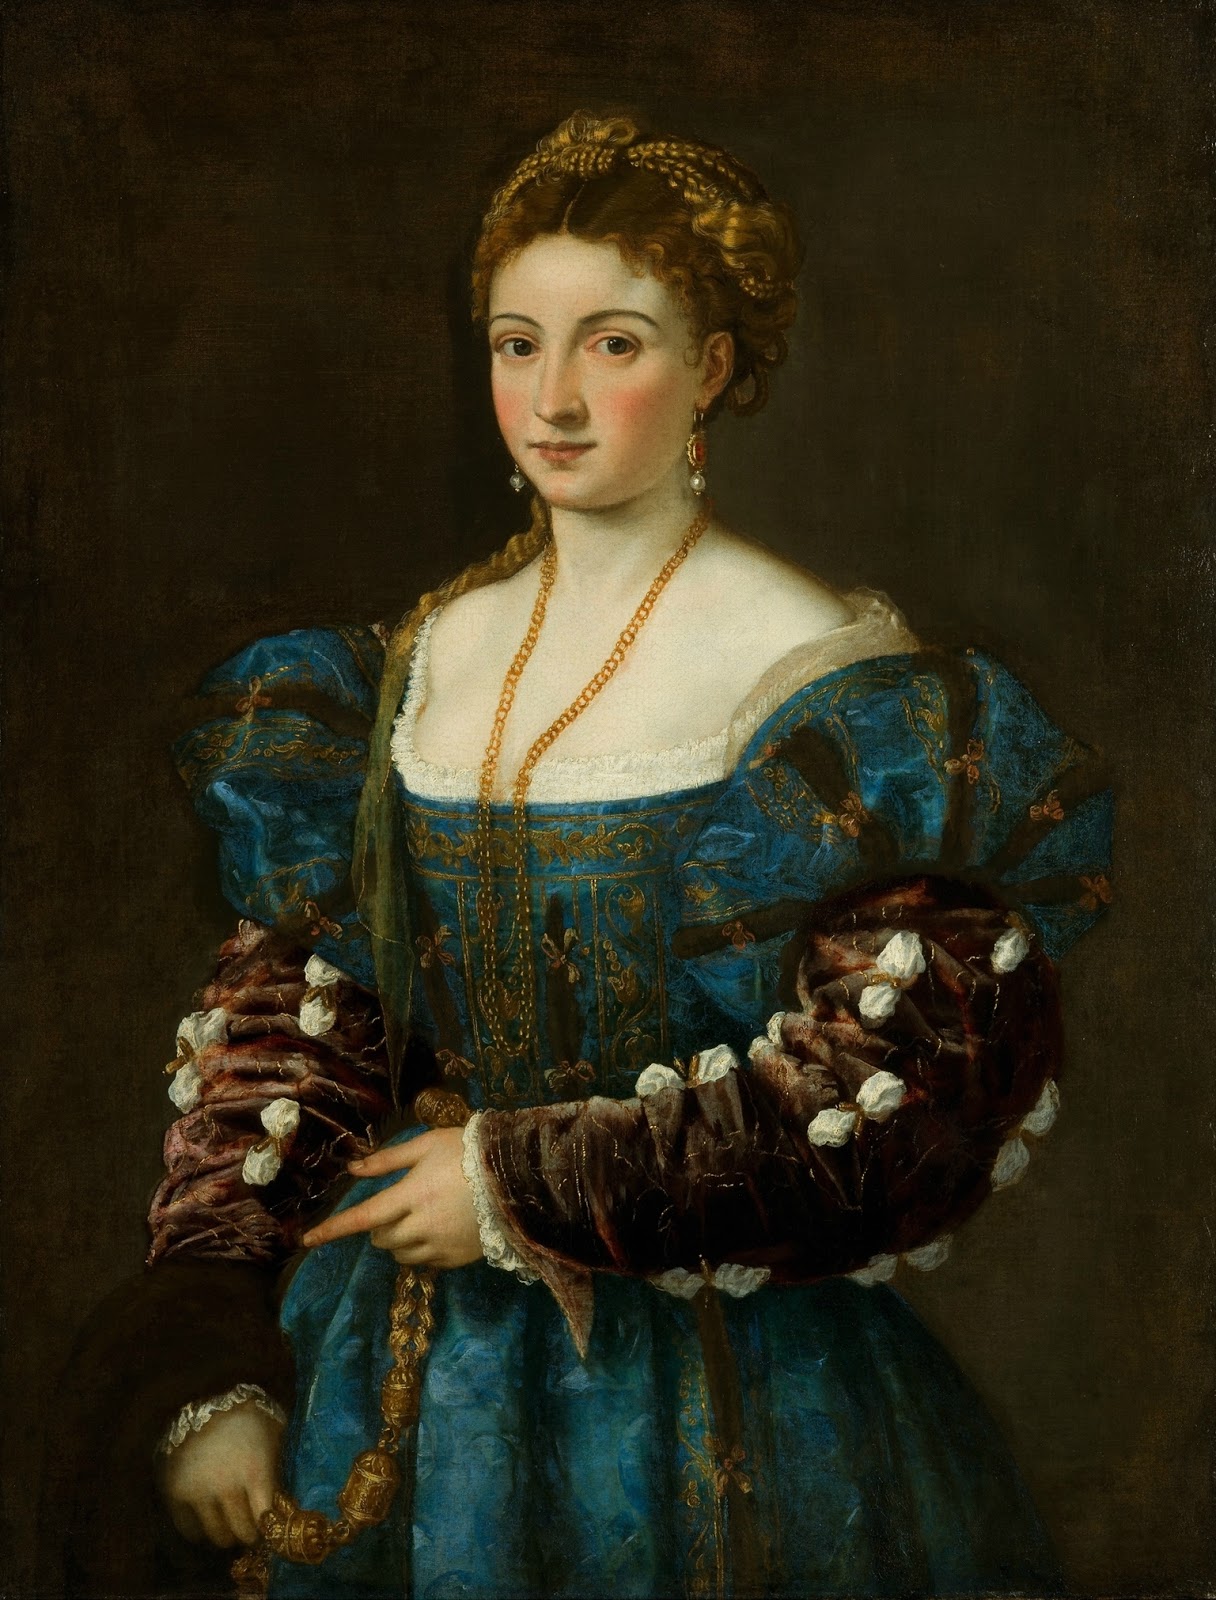 Titian+Danae-1540-1570 (34).jpg